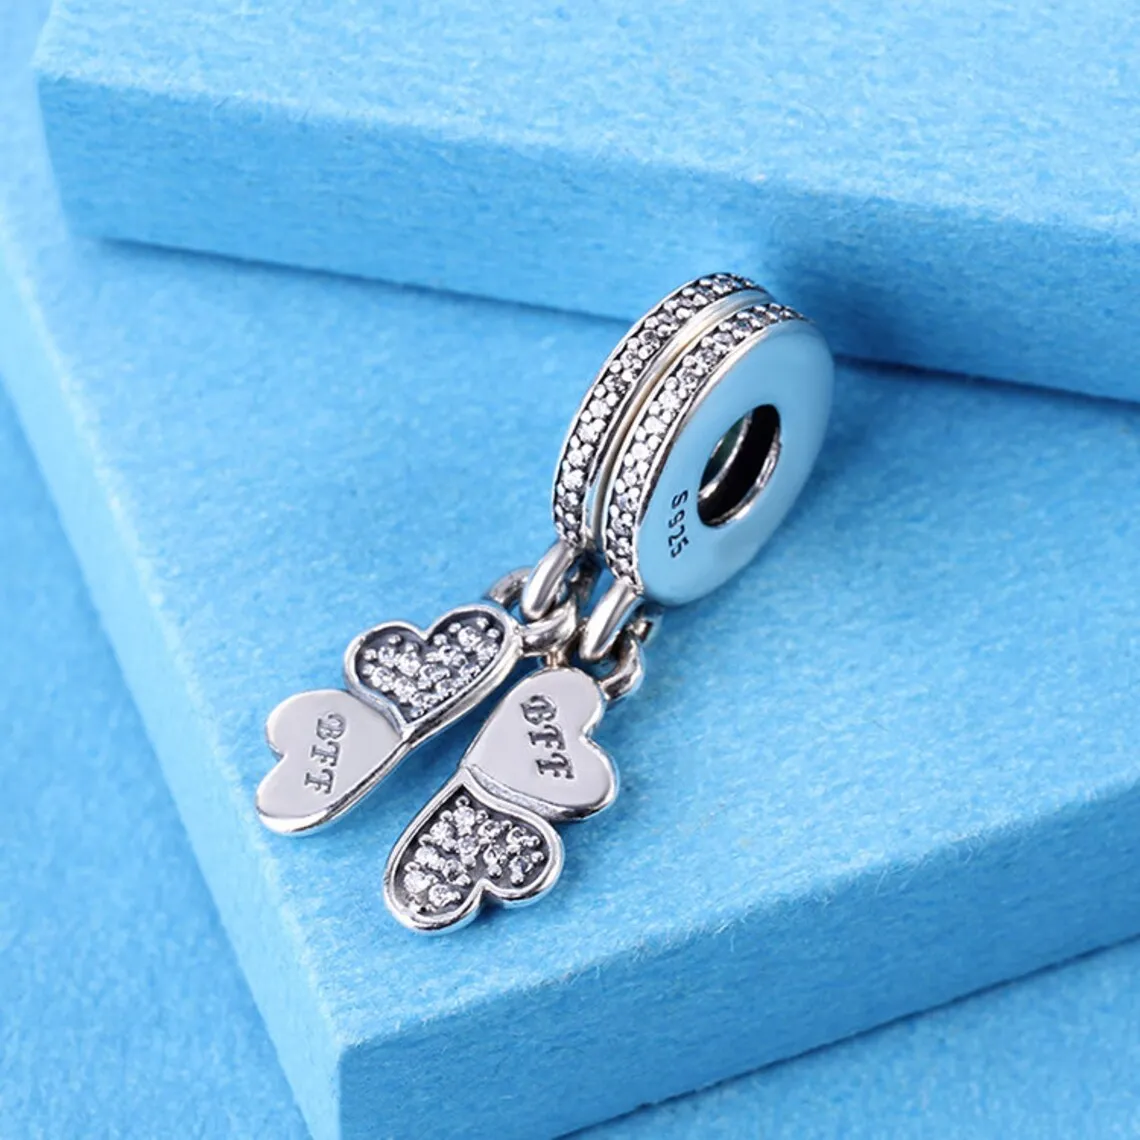 

925 Sterling Silver Best Friends Forever Dangle Charm Bead Fits All European Pandora Bracelets Necklaces